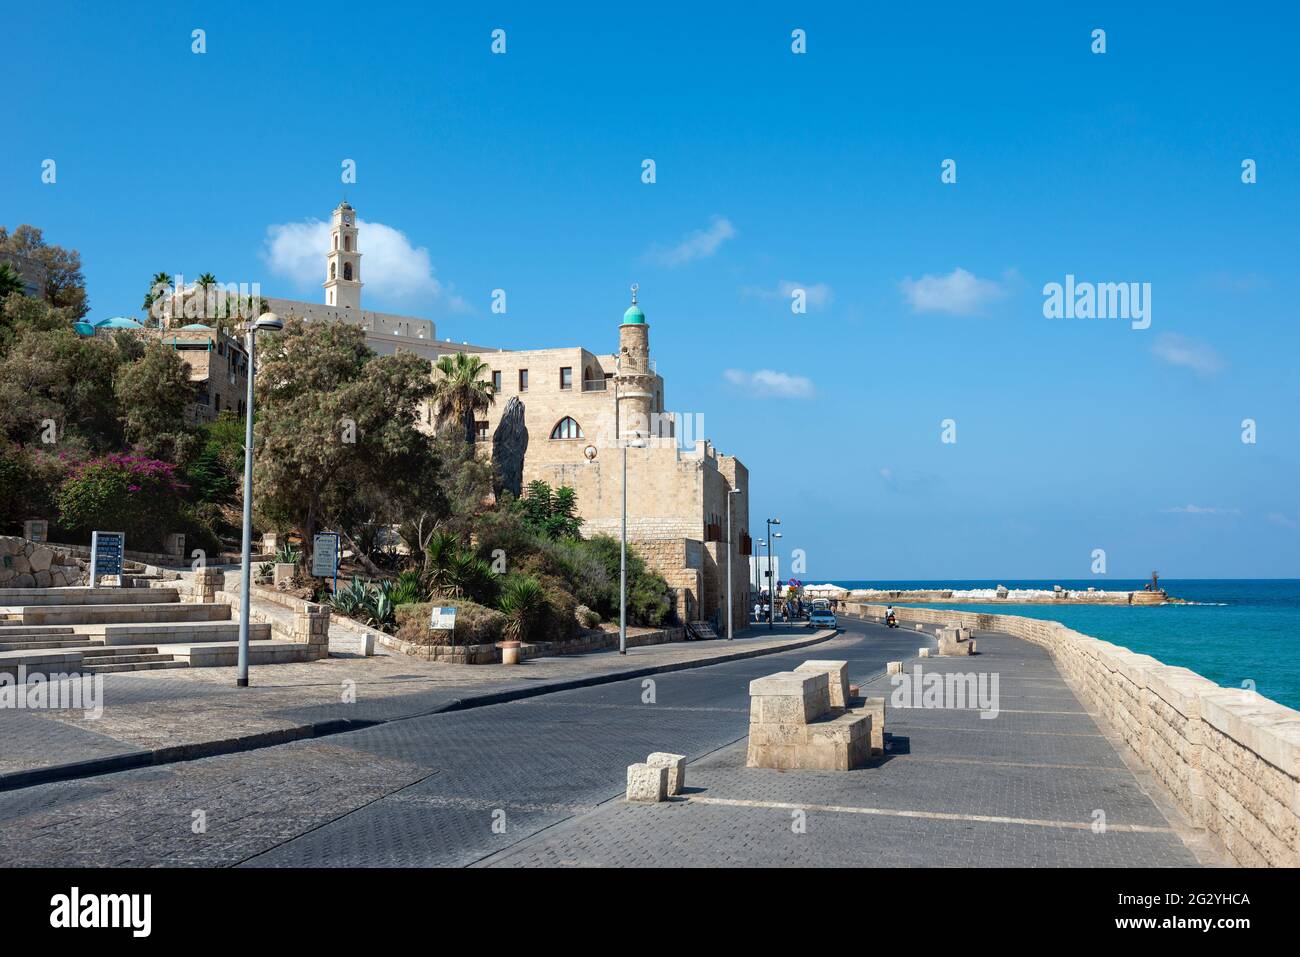 View of the Al-Bahr Mosque or Sea Mosque, minaret of the mosque in Old Jaffa, ancient port of Jaffa, Mediterranean Sea coast in Tel Aviv Yaffo, Israel Stock Photo